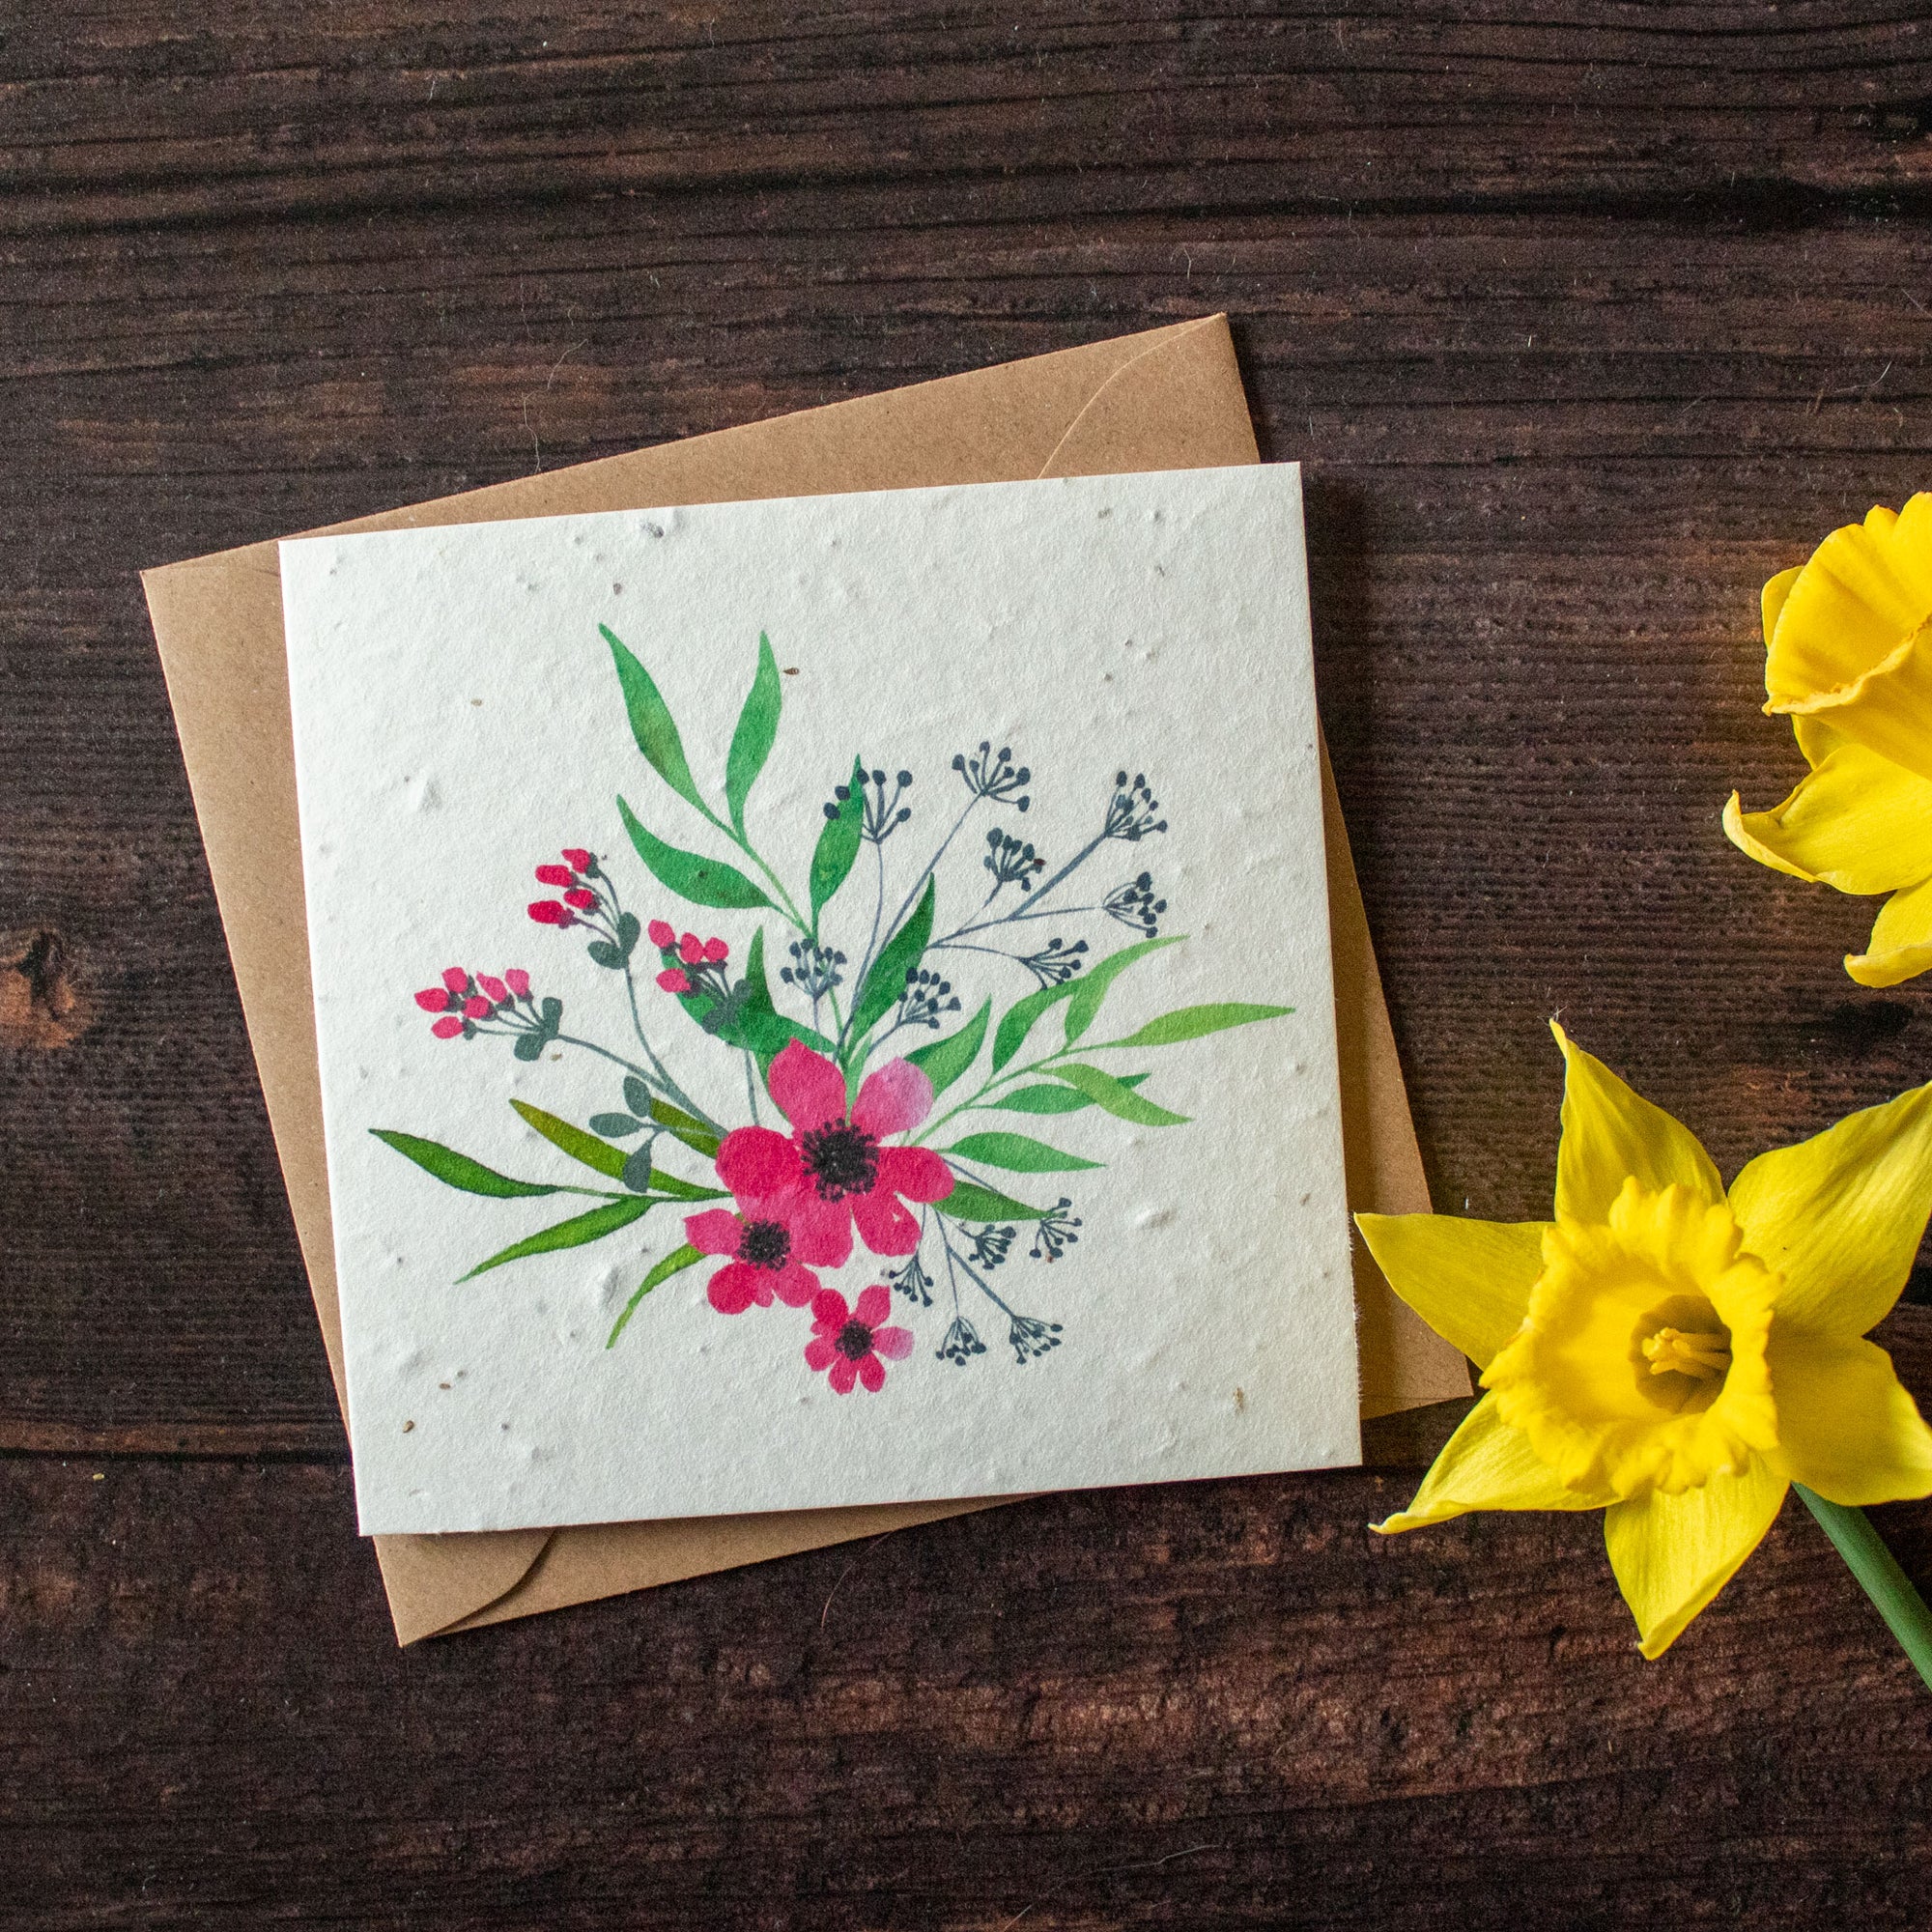 Plantable Greetings Card - Flower Bunch | Greetings Card - The Naughty Shrew